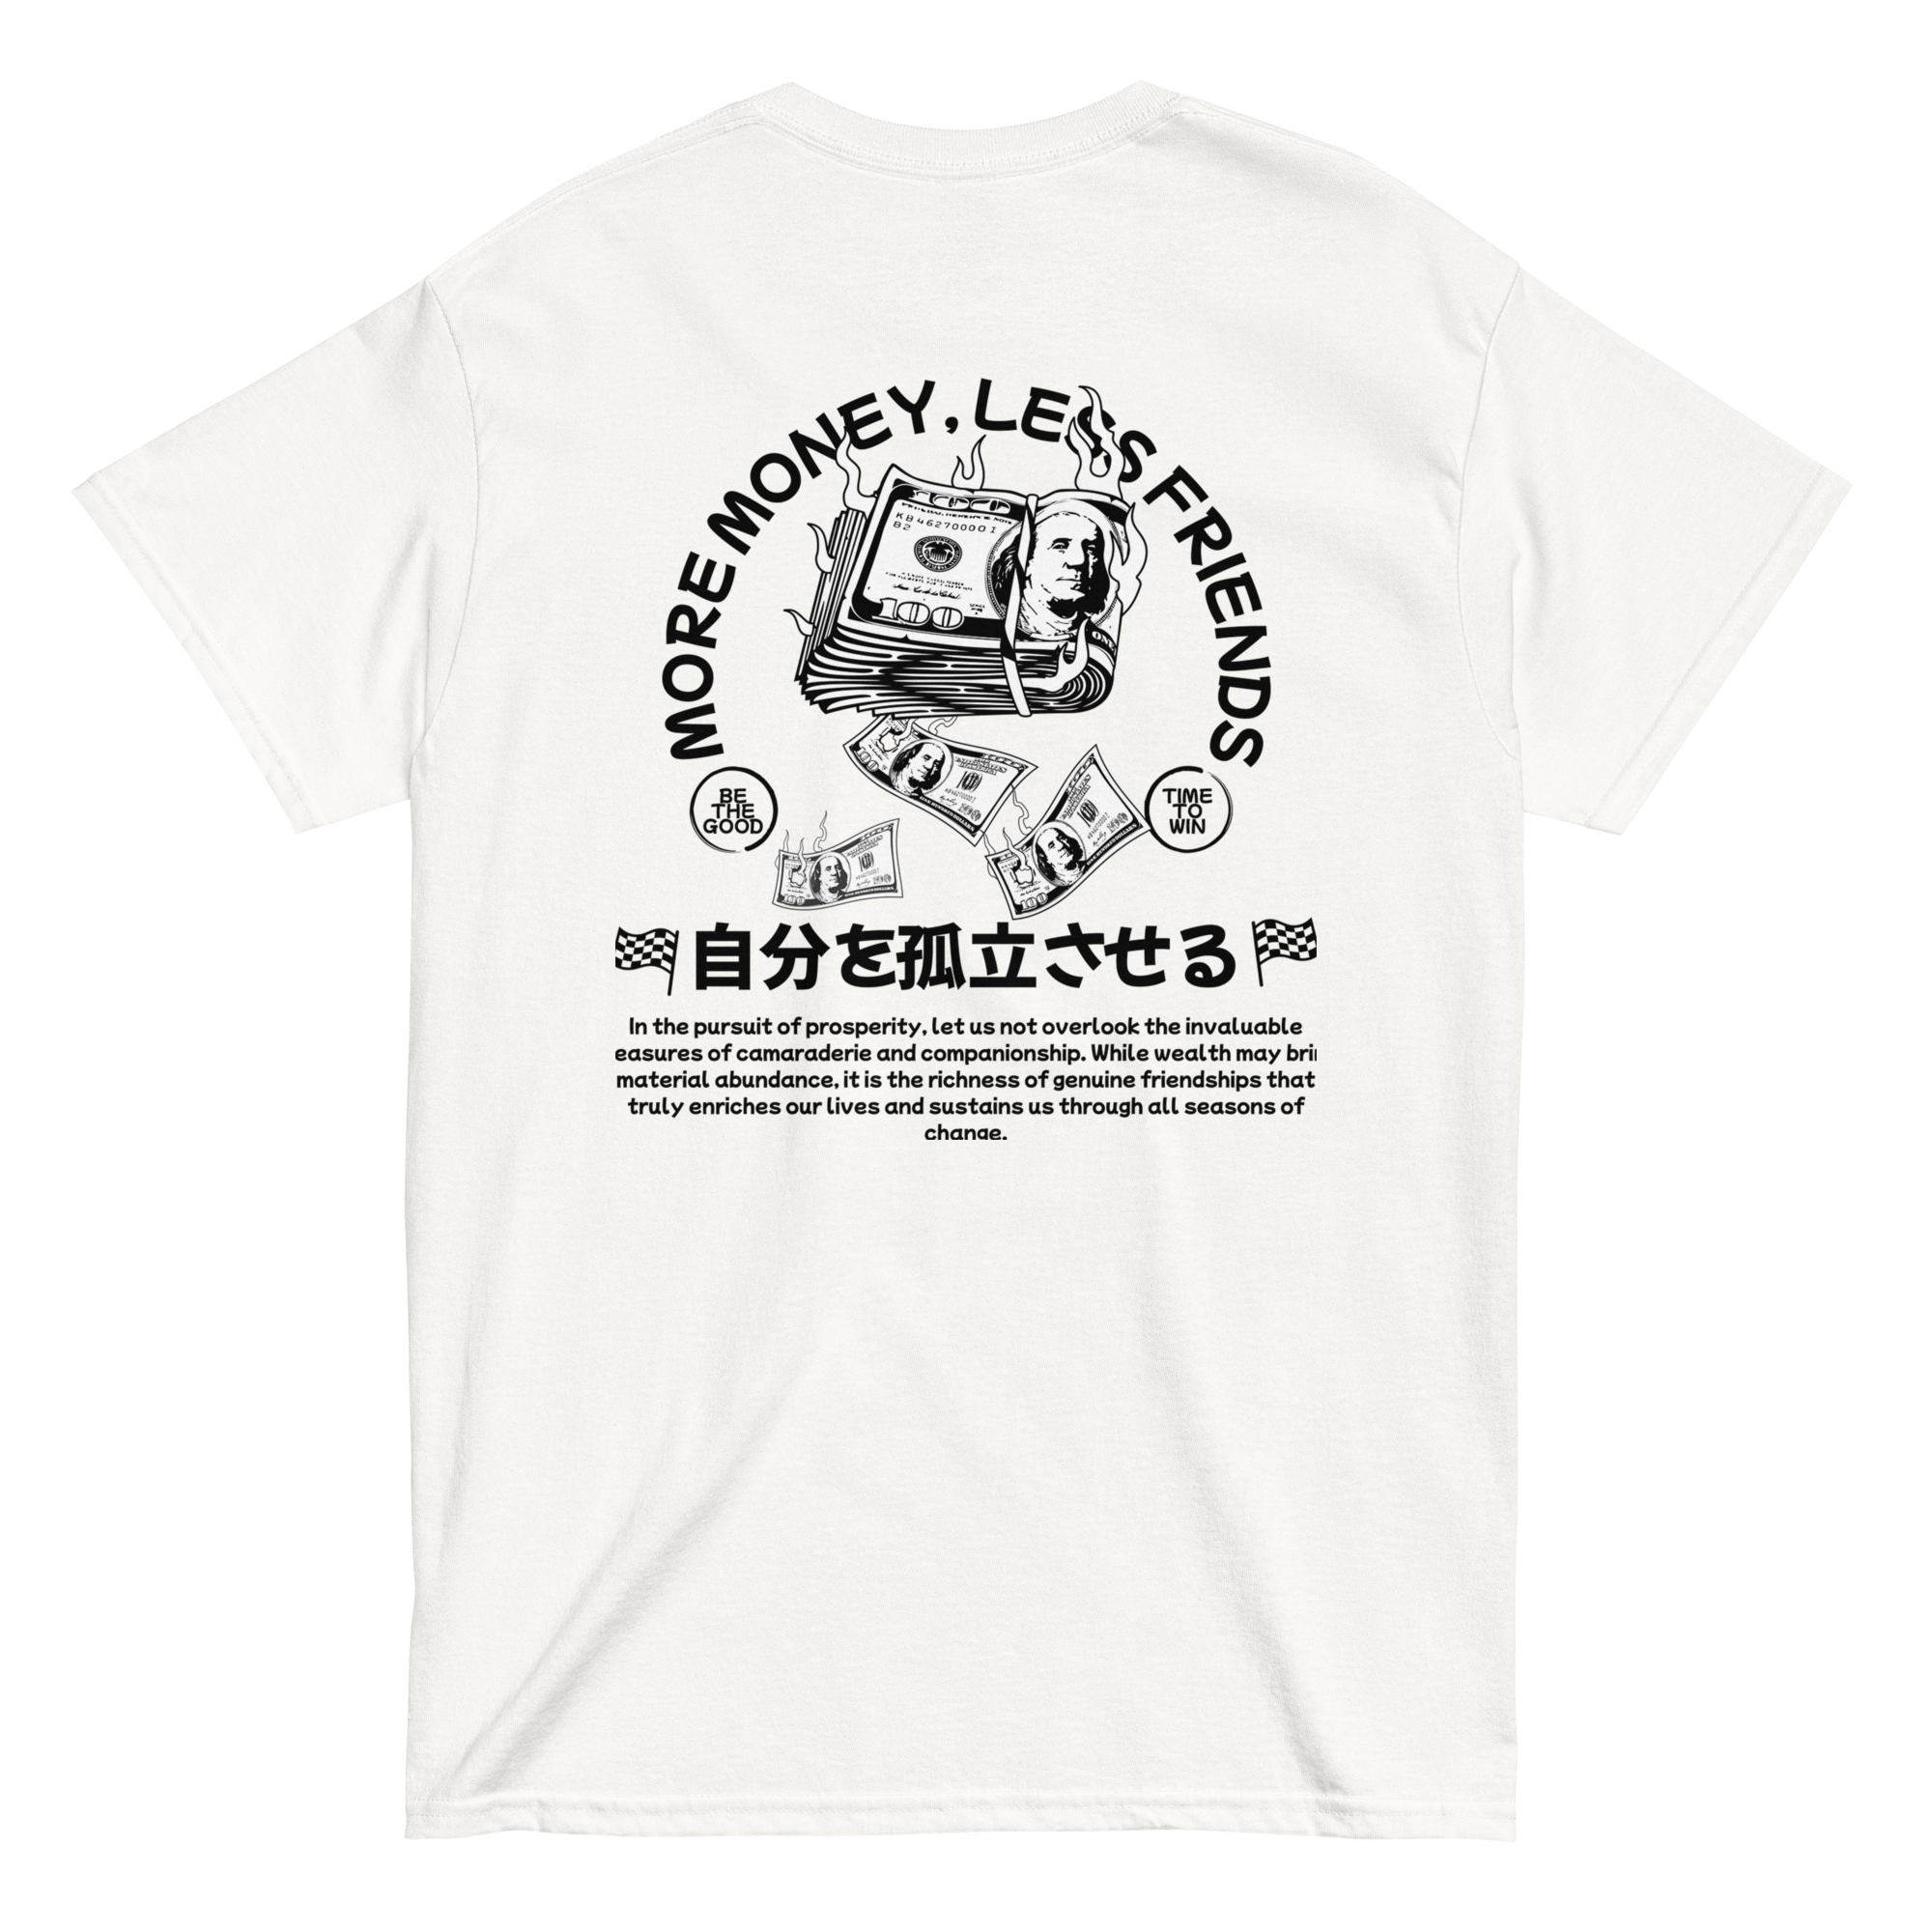 'More Money, Less Friends' t-shirt